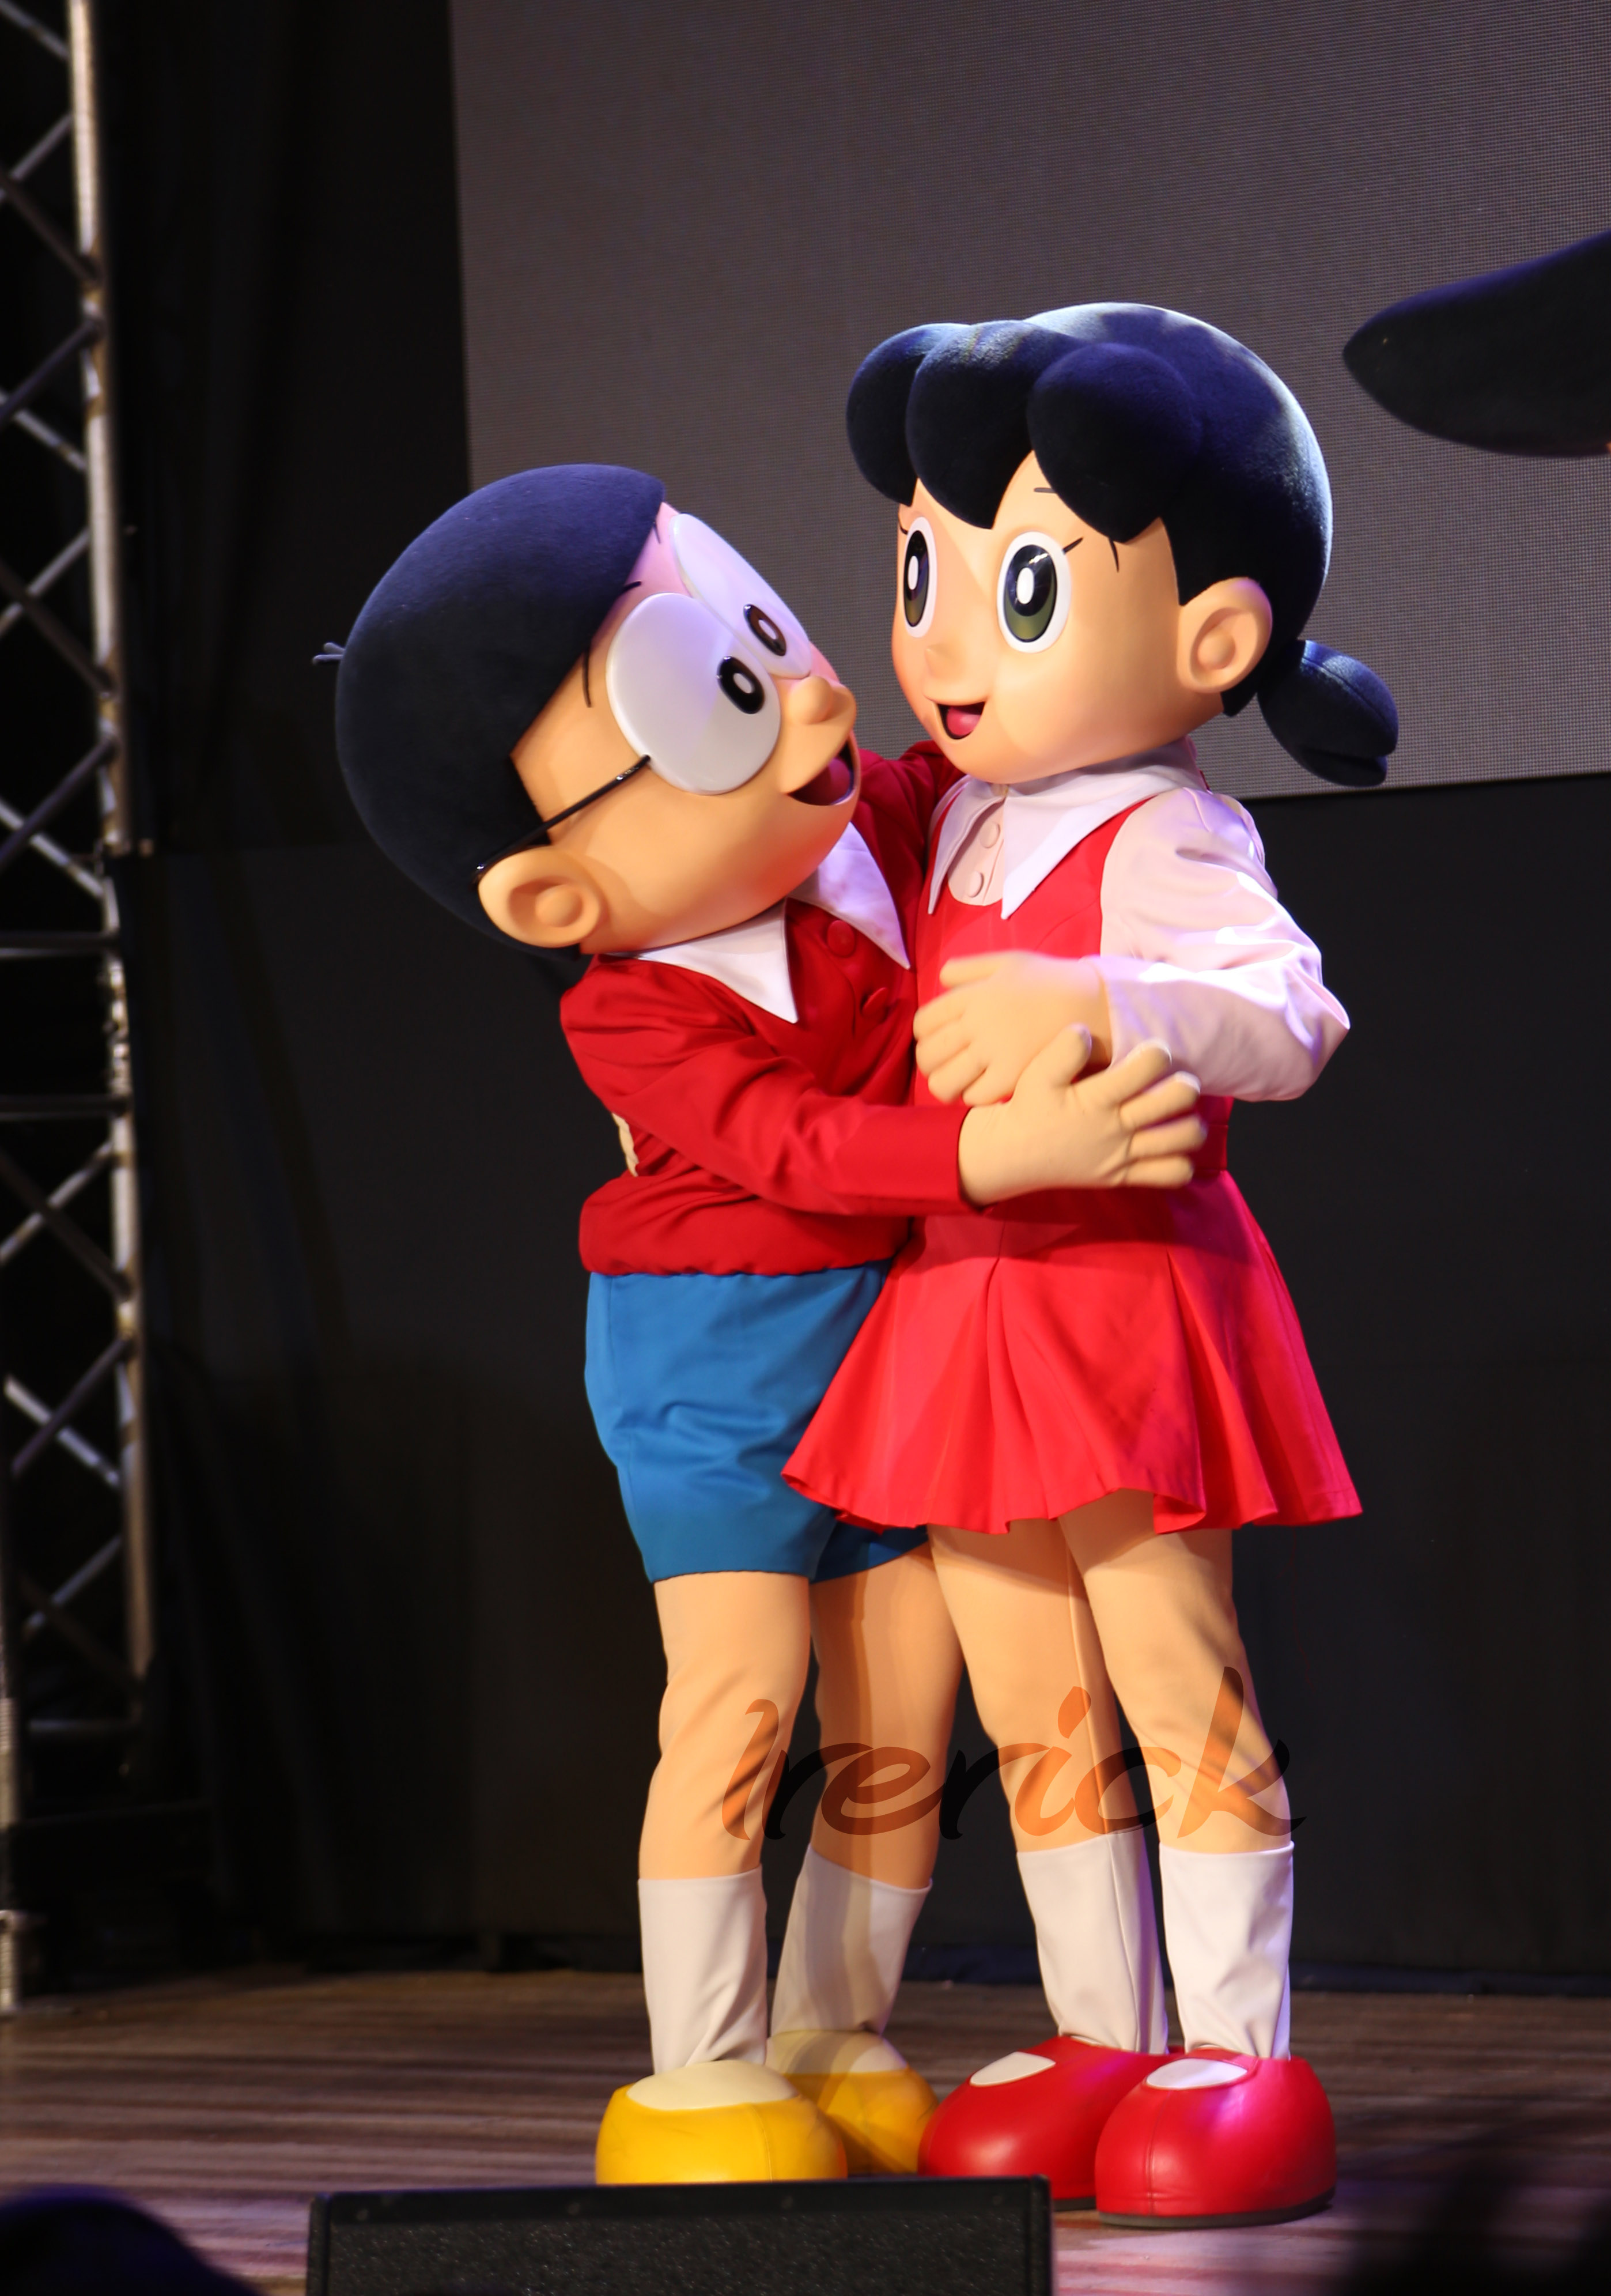 nobita shizuka love fondos de escritorio,dibujos animados,dibujos animados,figurilla,juguete,animación